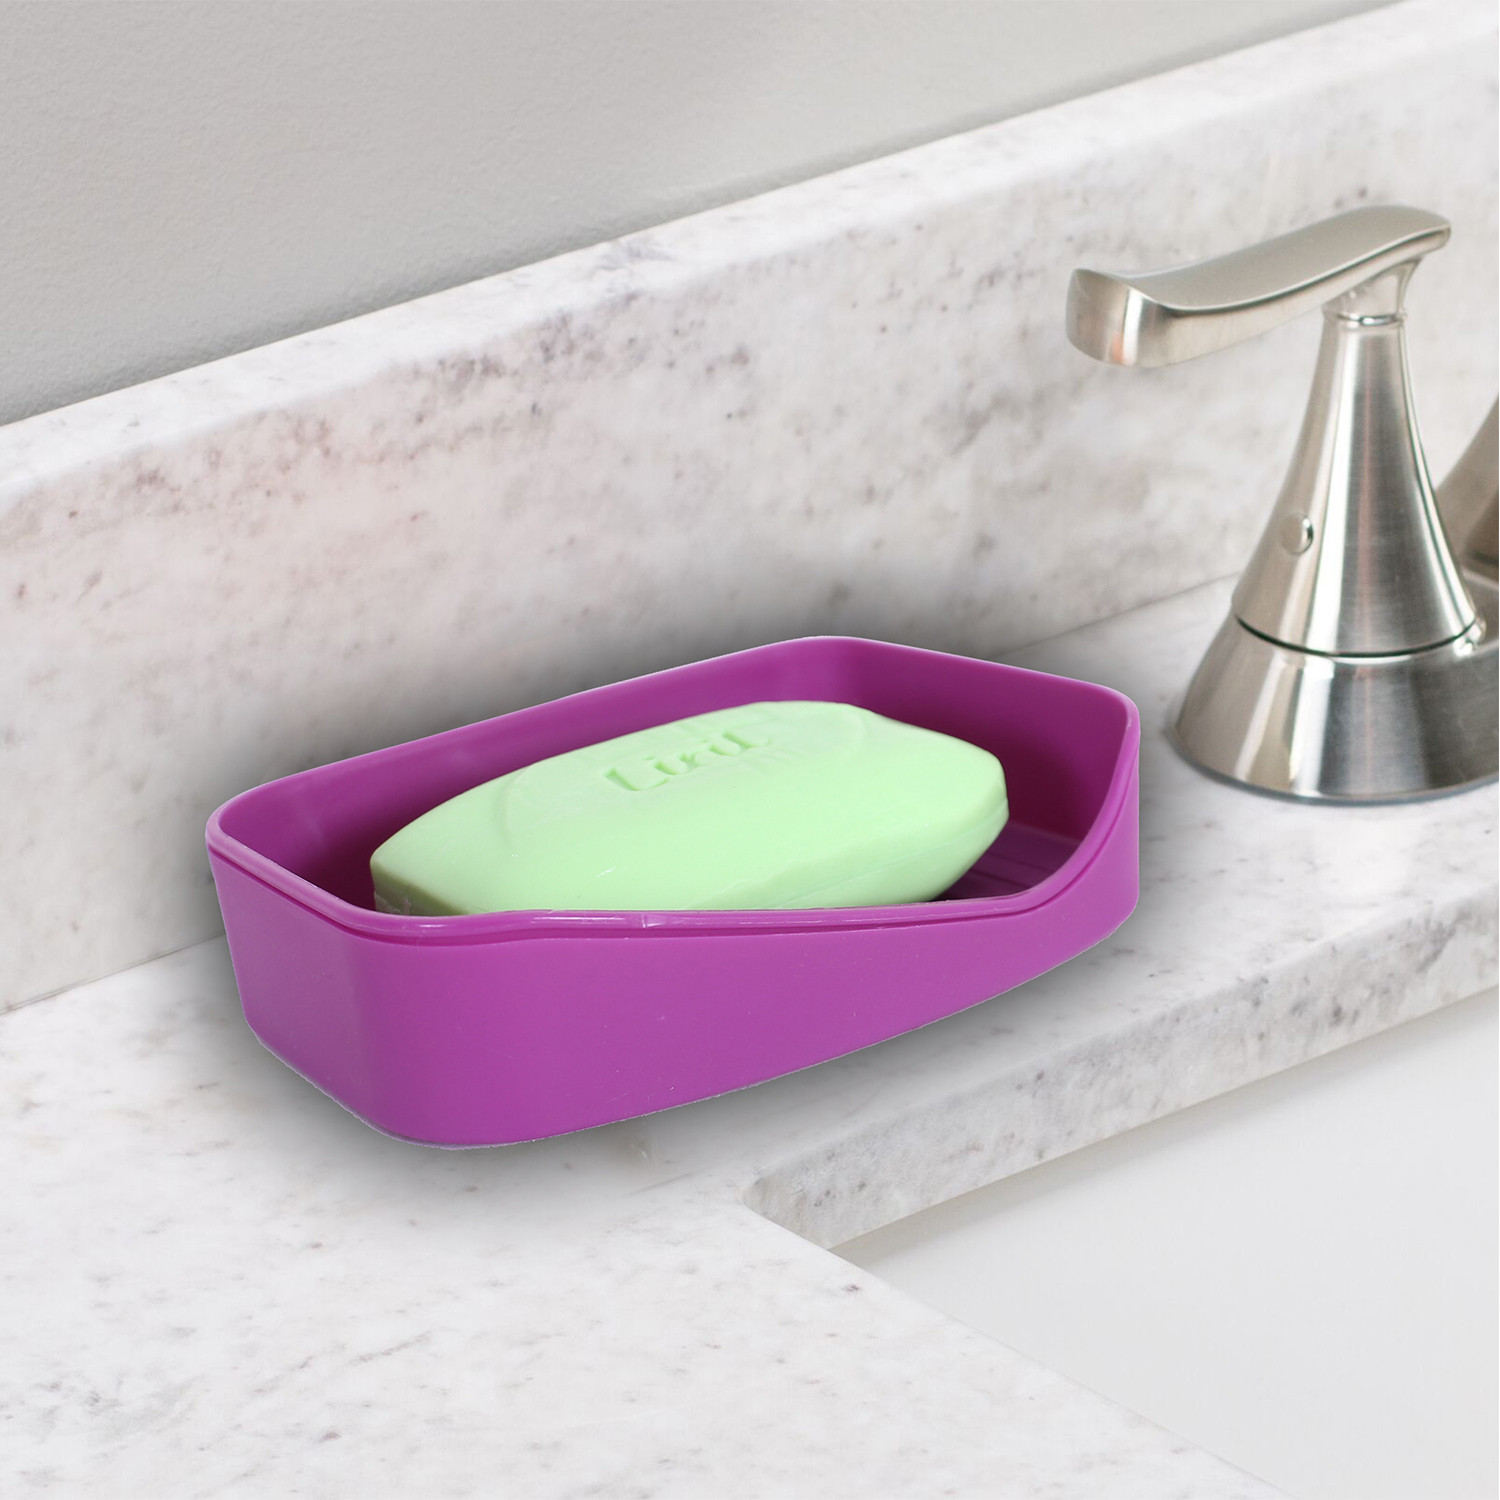 Kuber Industries Saop Holder For Kitchen Sink|Portable Plastic Double Desk Self Draining Soap Holder|Soap Holder For Kitchen Bathroom,Wash Basin| (Purple)